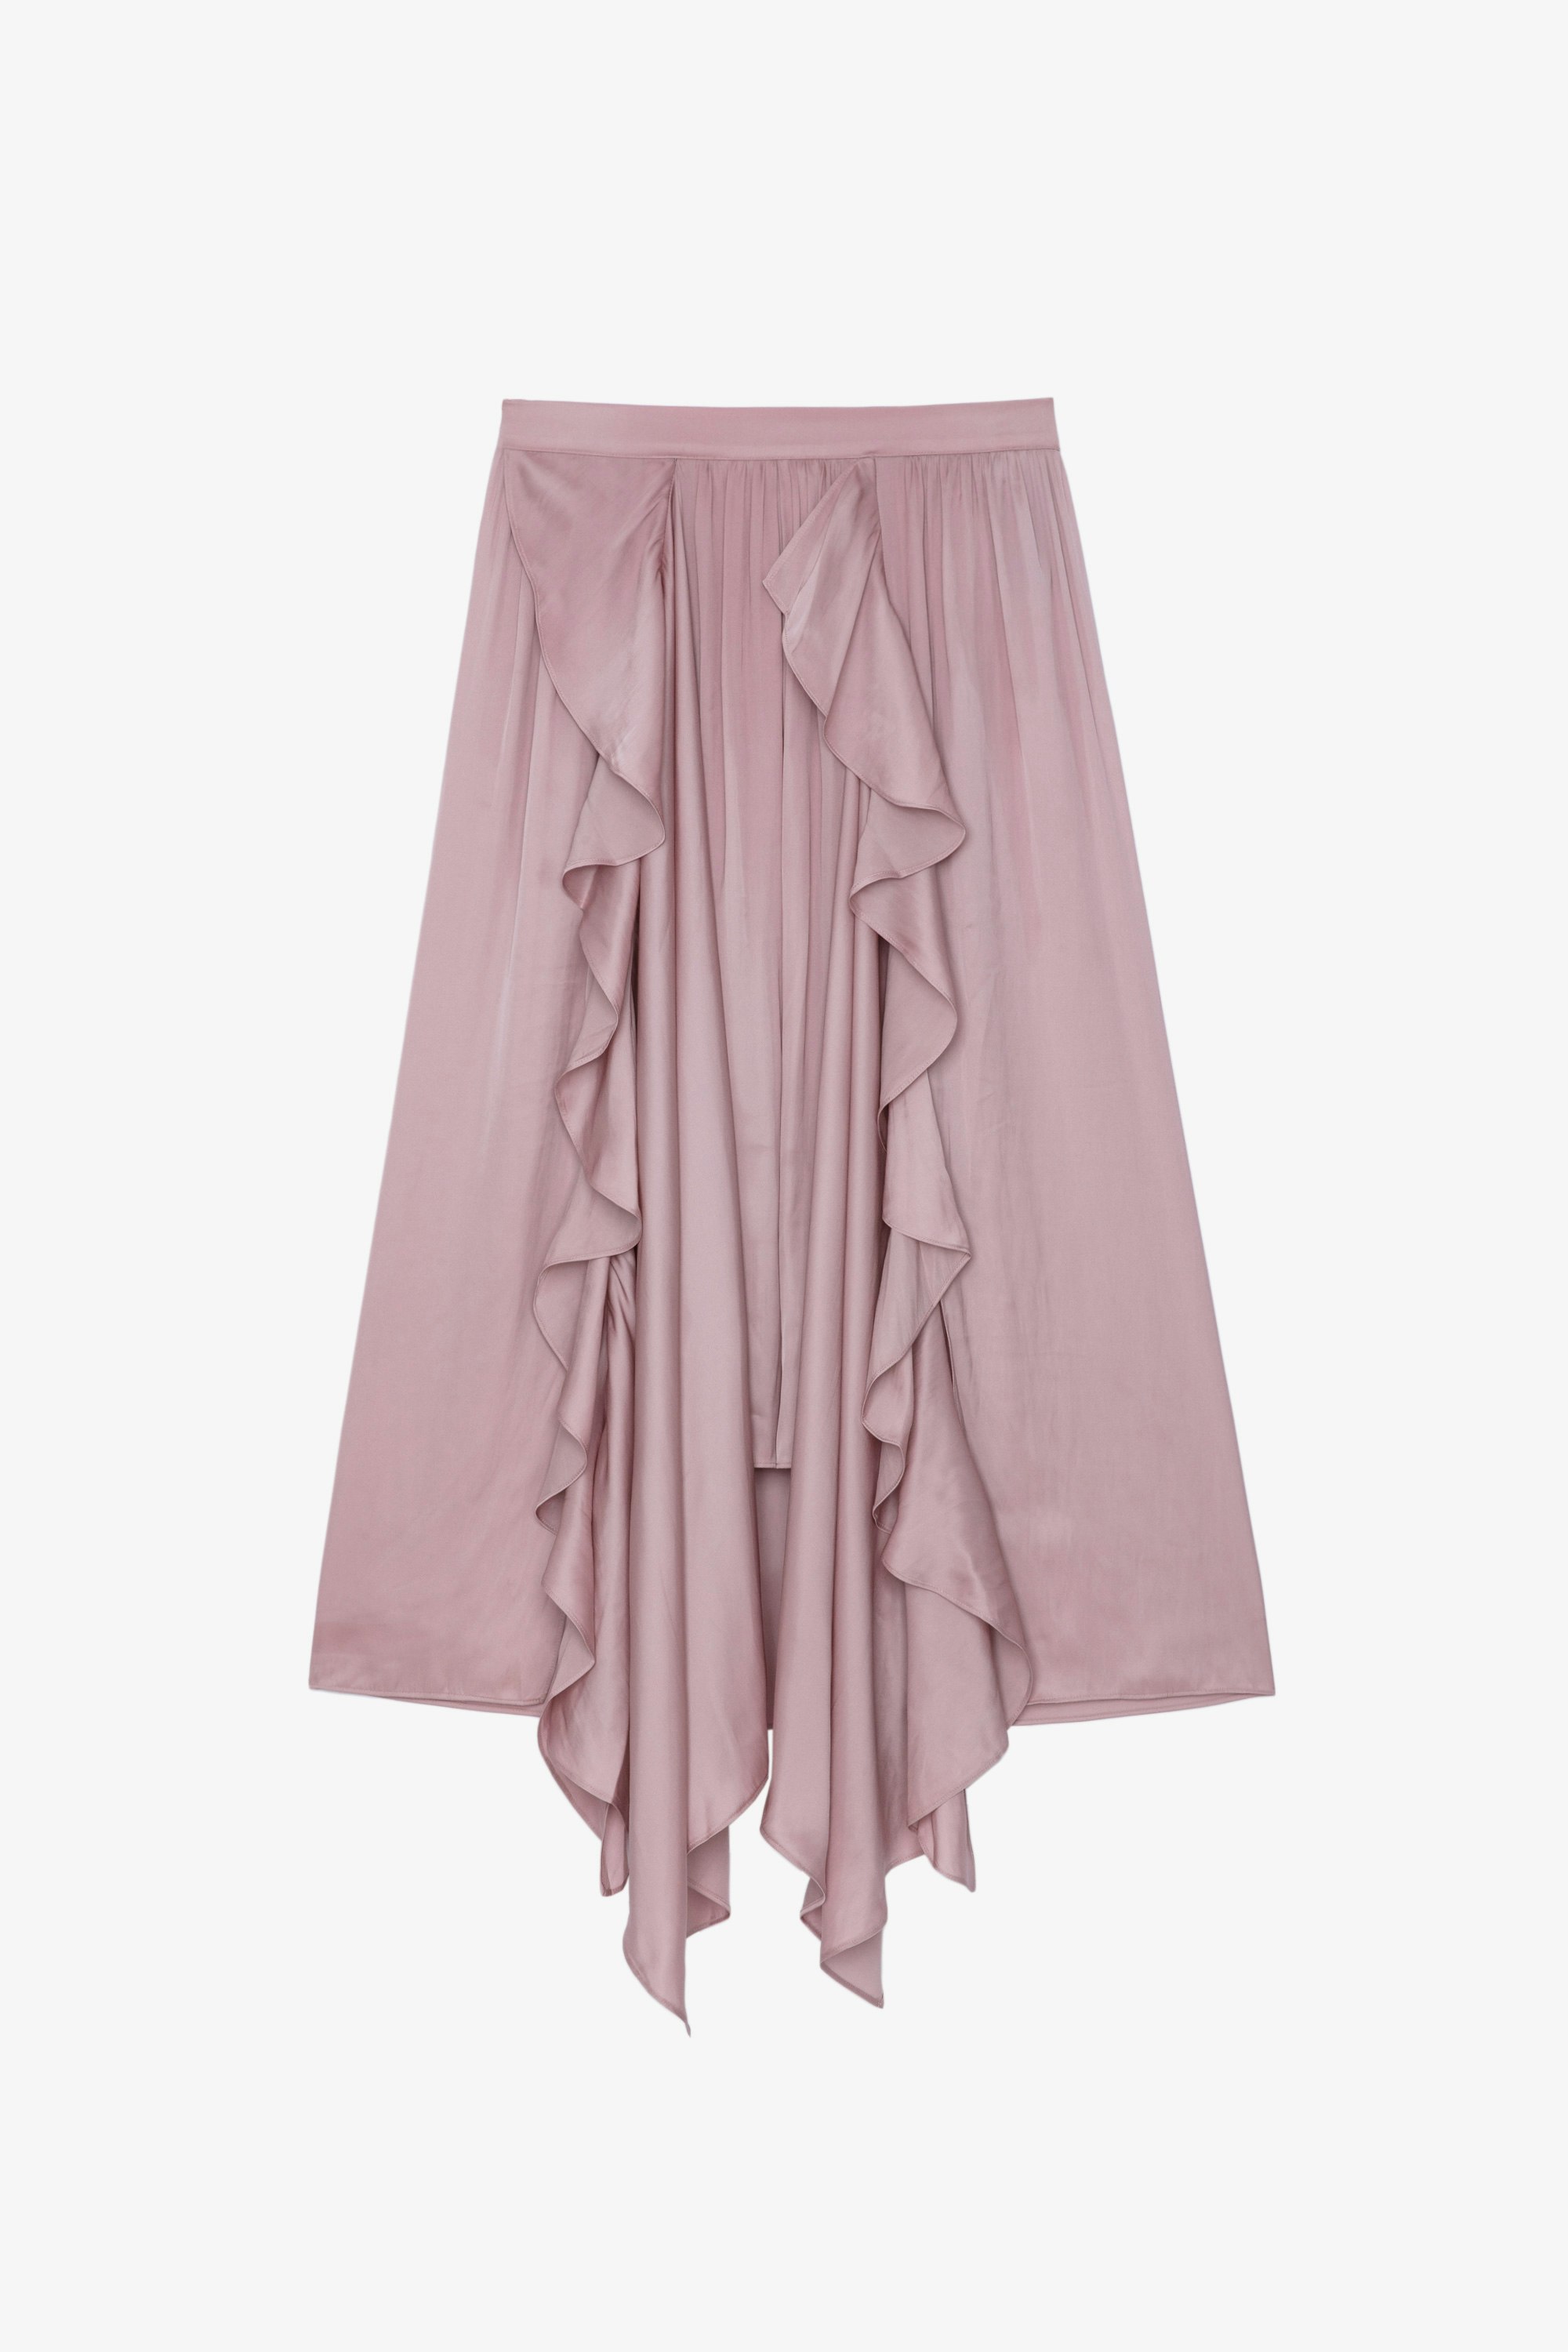 Jeb Skirt Women’s long pink asymmetric skirt with ruffles